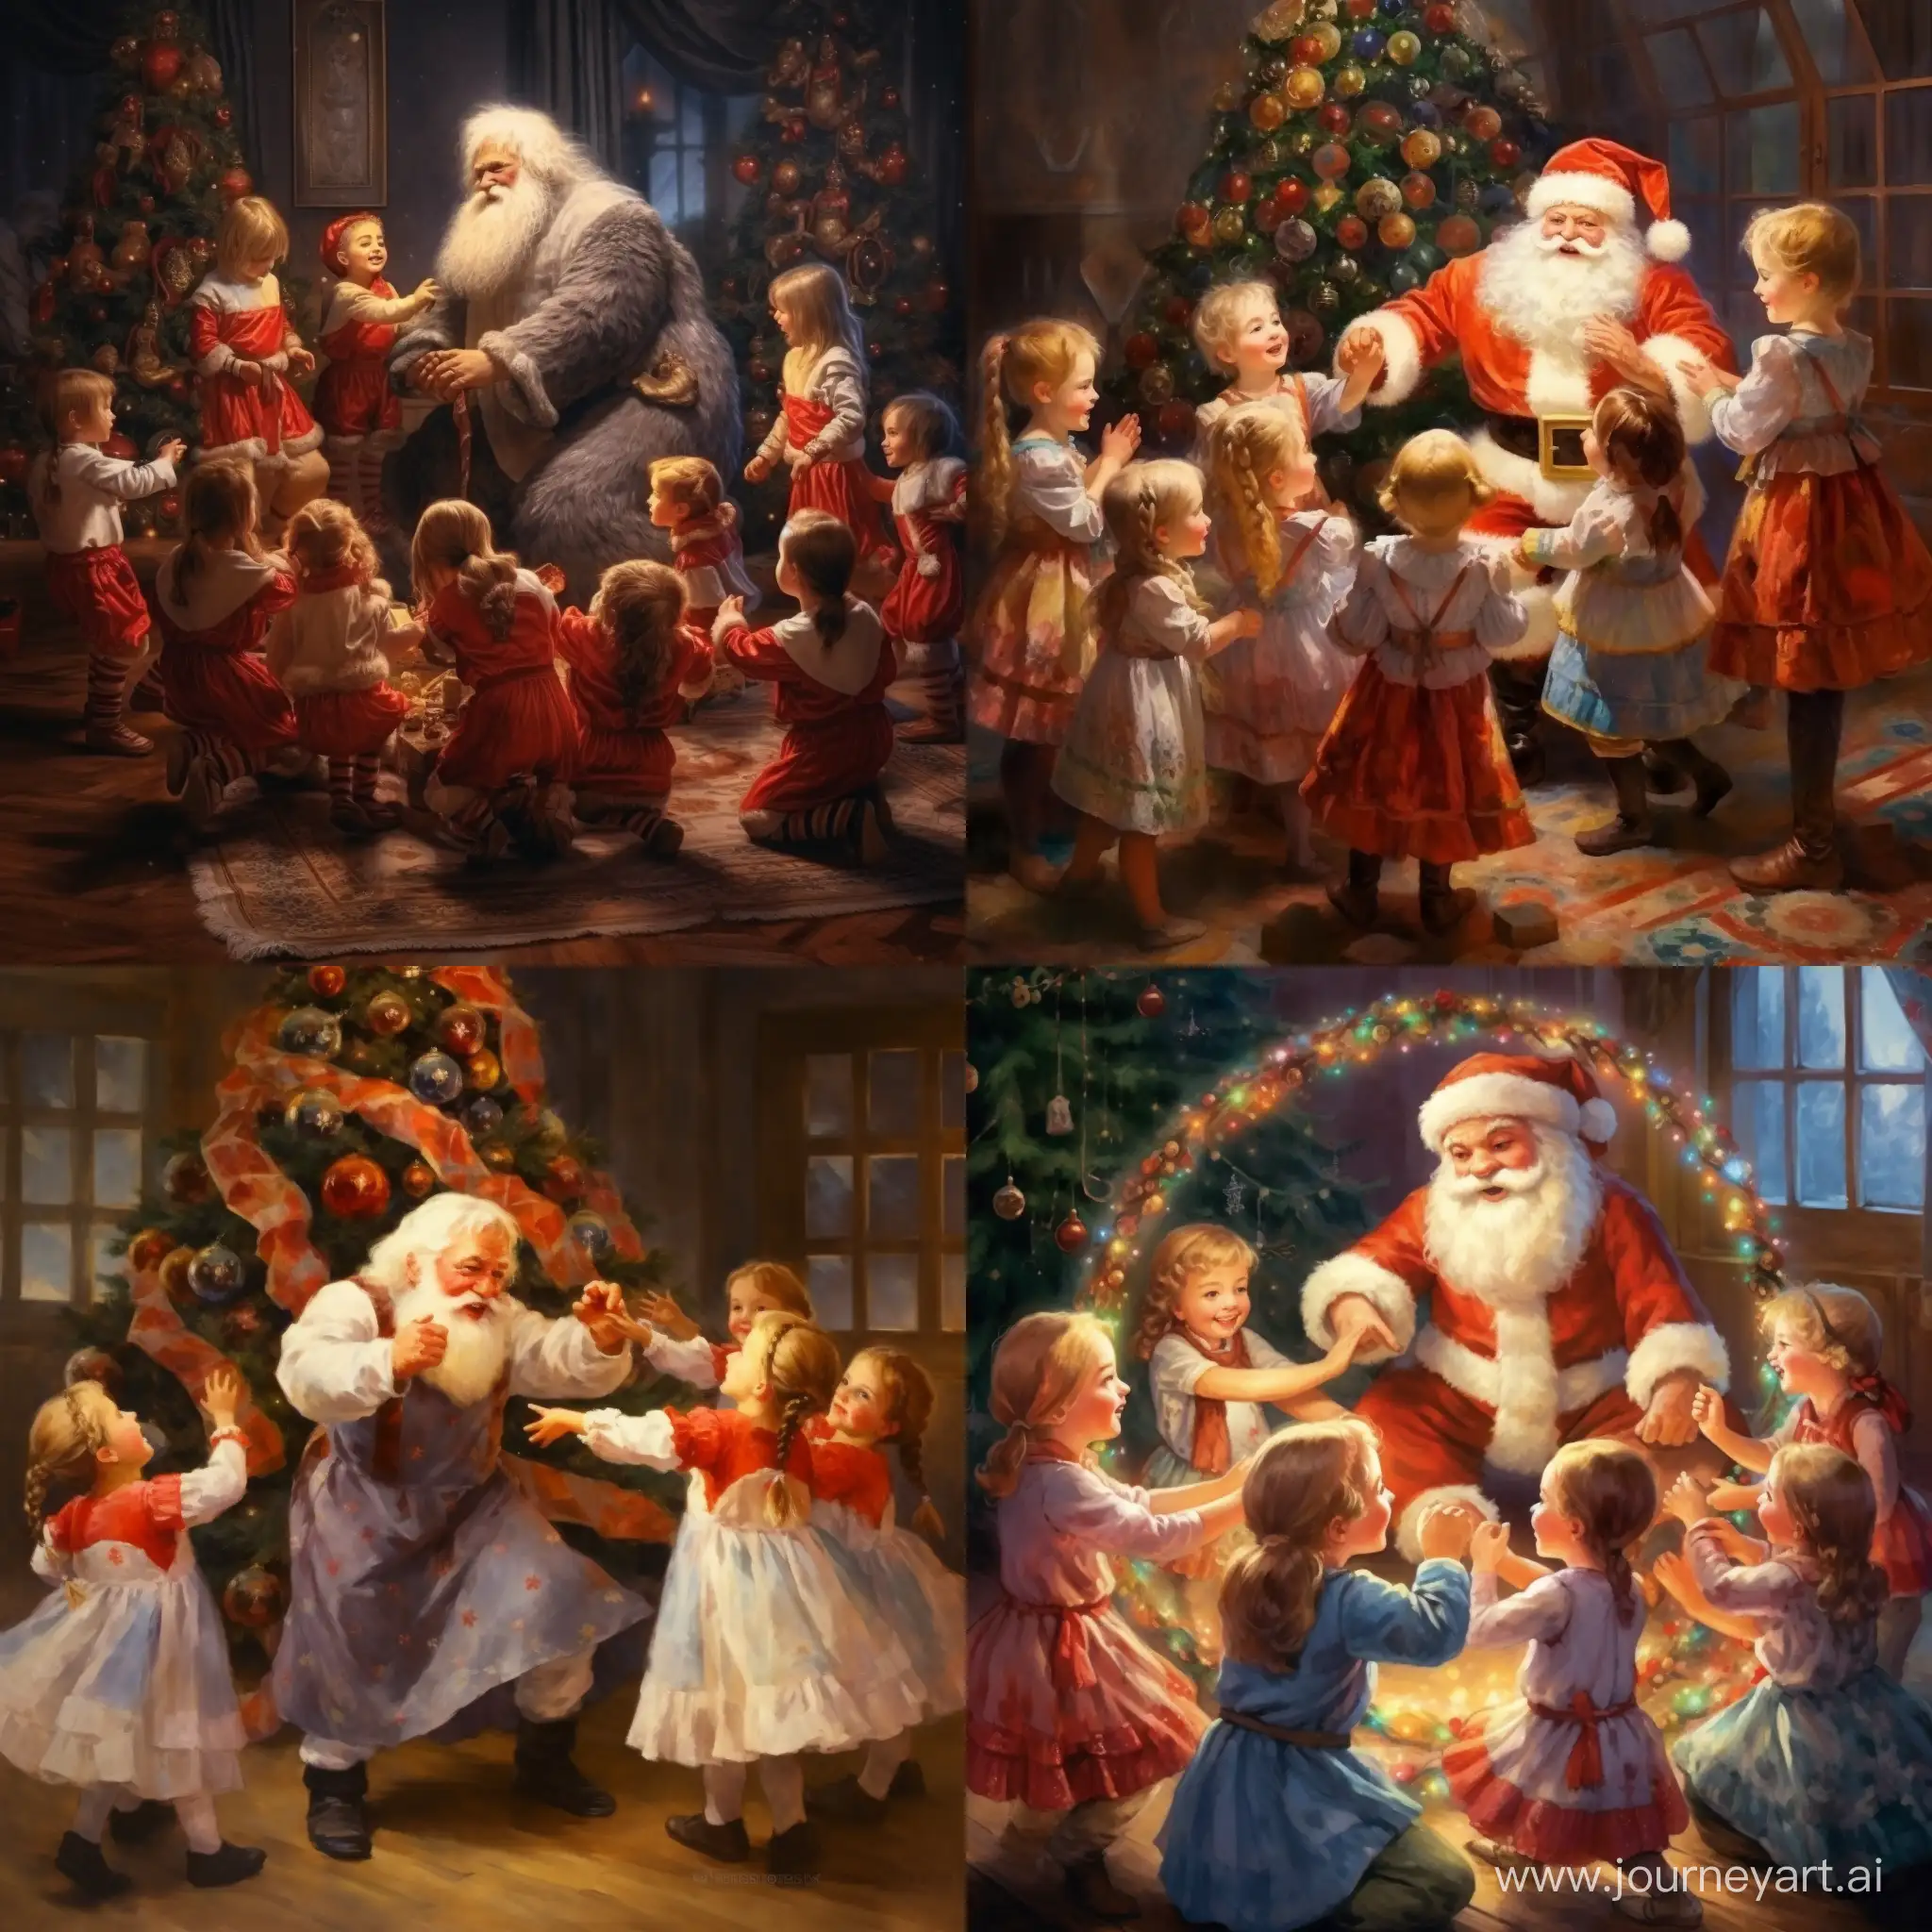 Joyful-Children-Dancing-Around-a-Christmas-Tree-with-Crying-Ded-Moroz